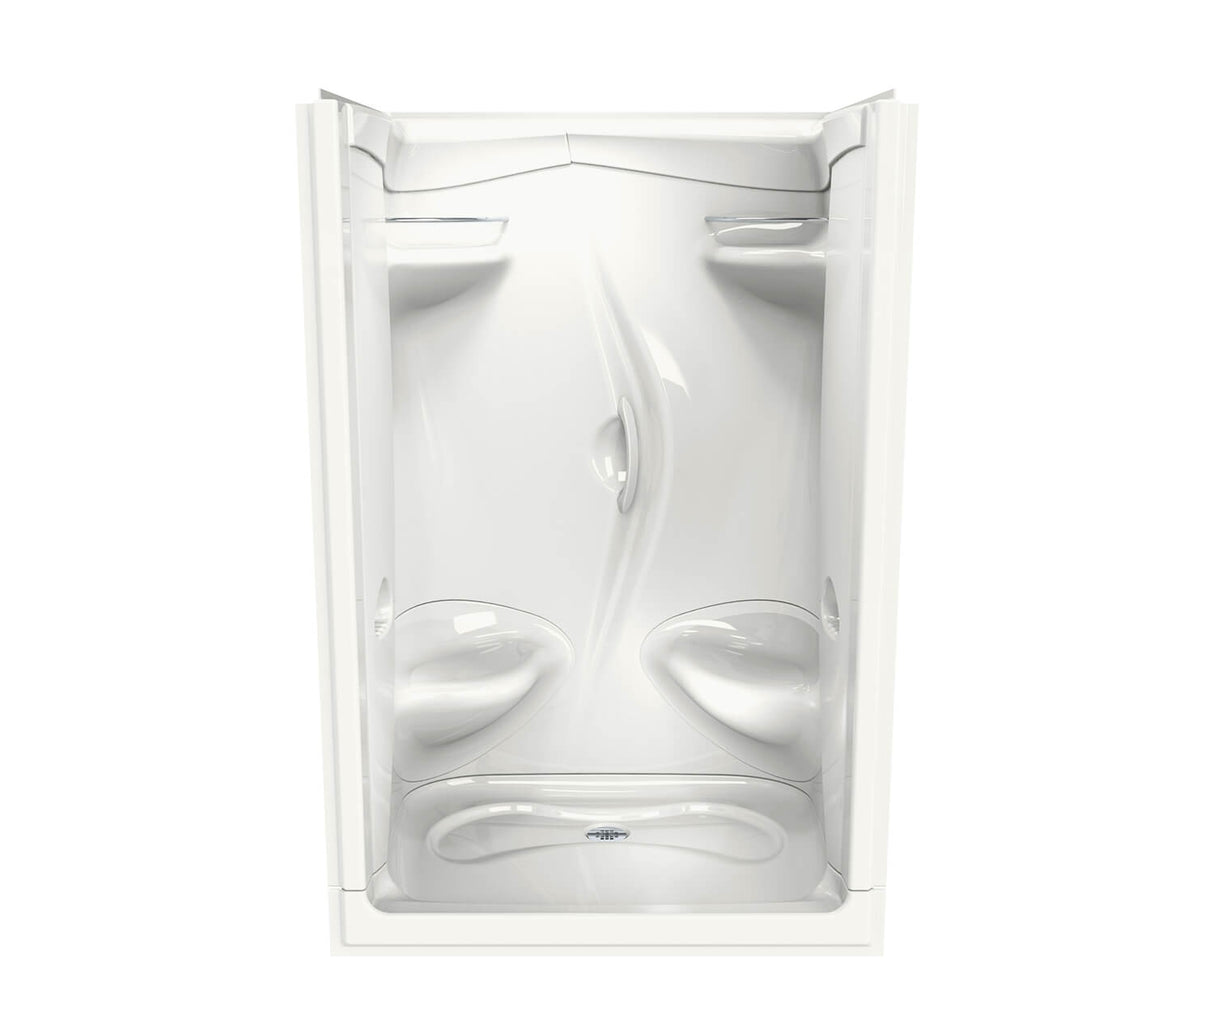 MAAX 101140-000-001-106 Stamina 48-II 51 x 36 Acrylic Alcove Center Drain Two-Piece Shower in White